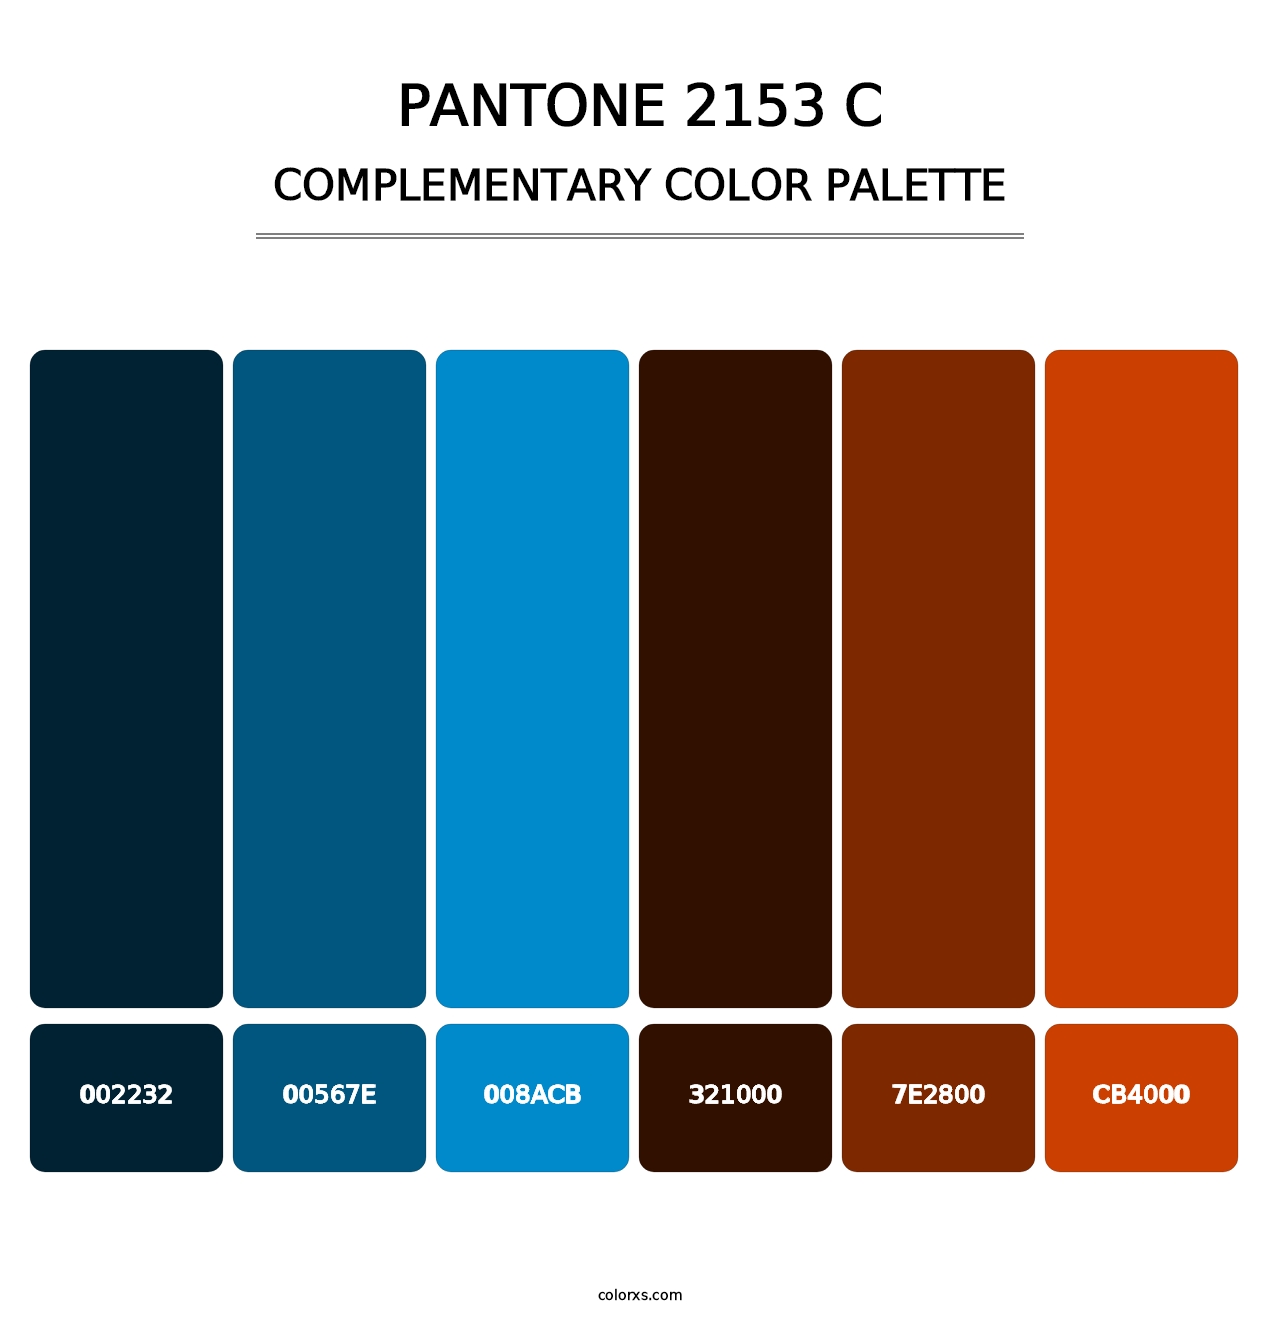 PANTONE 2153 C - Complementary Color Palette